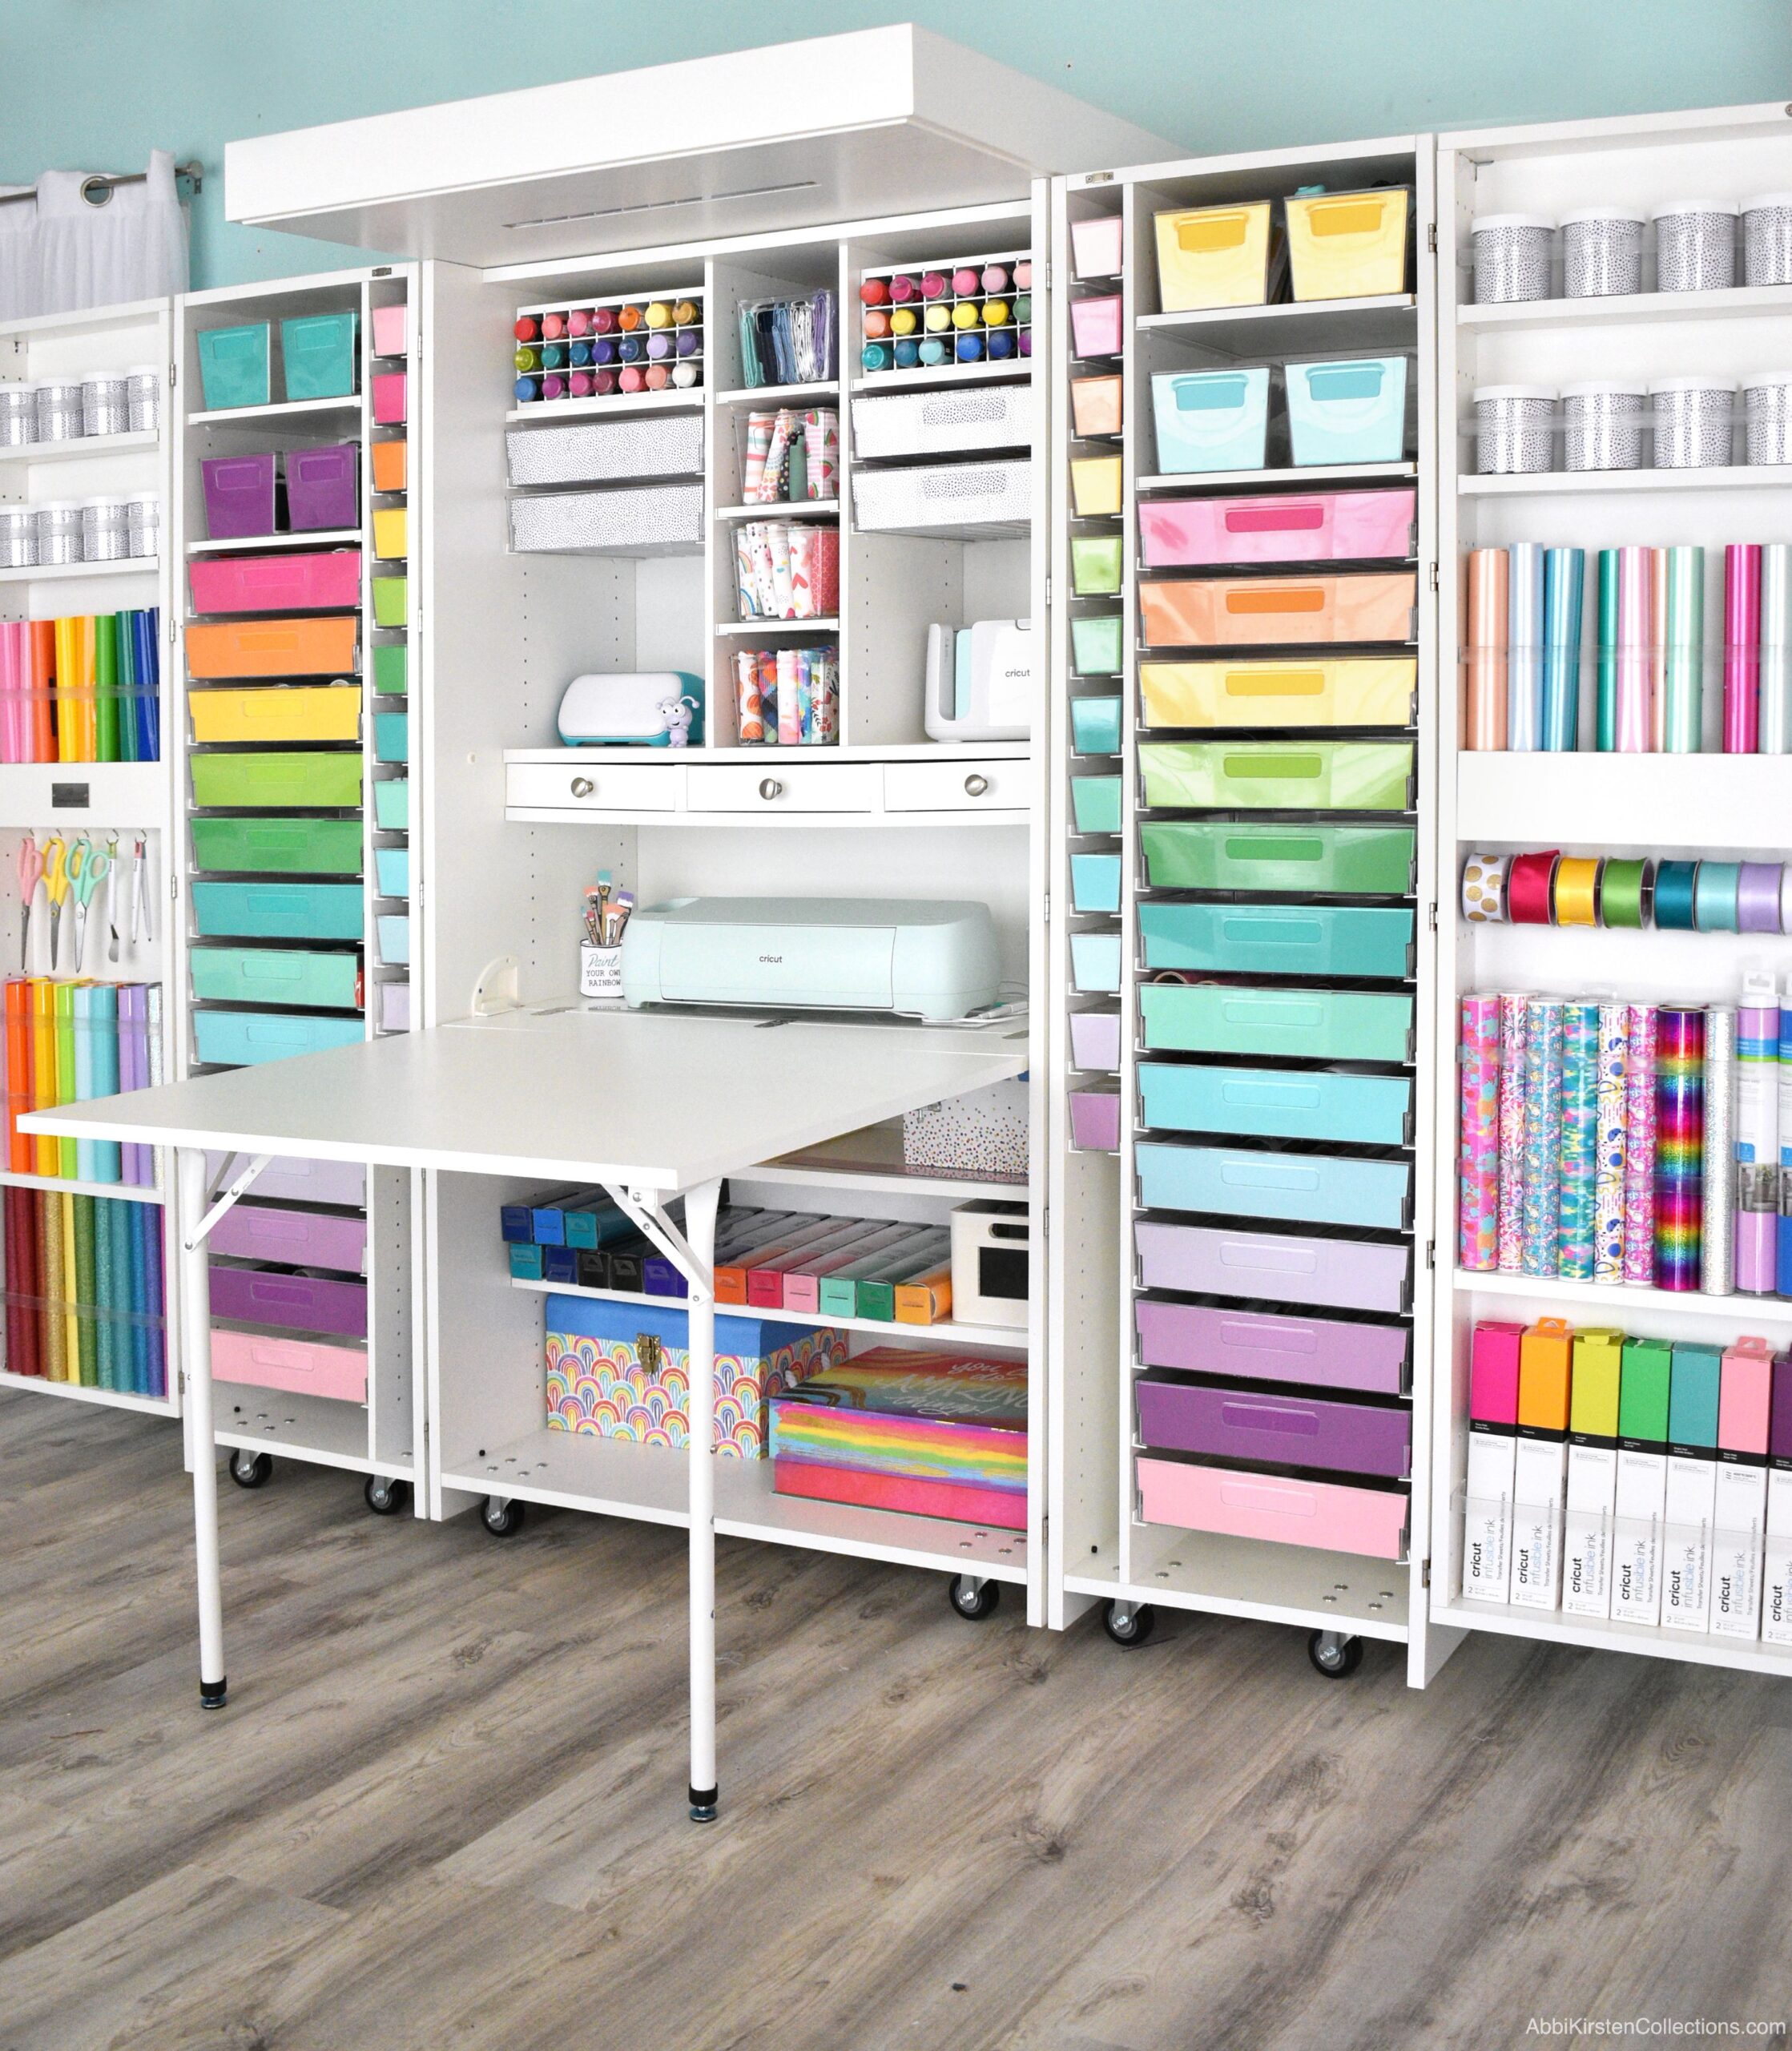 Dreambox Craft Room Storage Cabinet Review Story - Abbi Kirsten